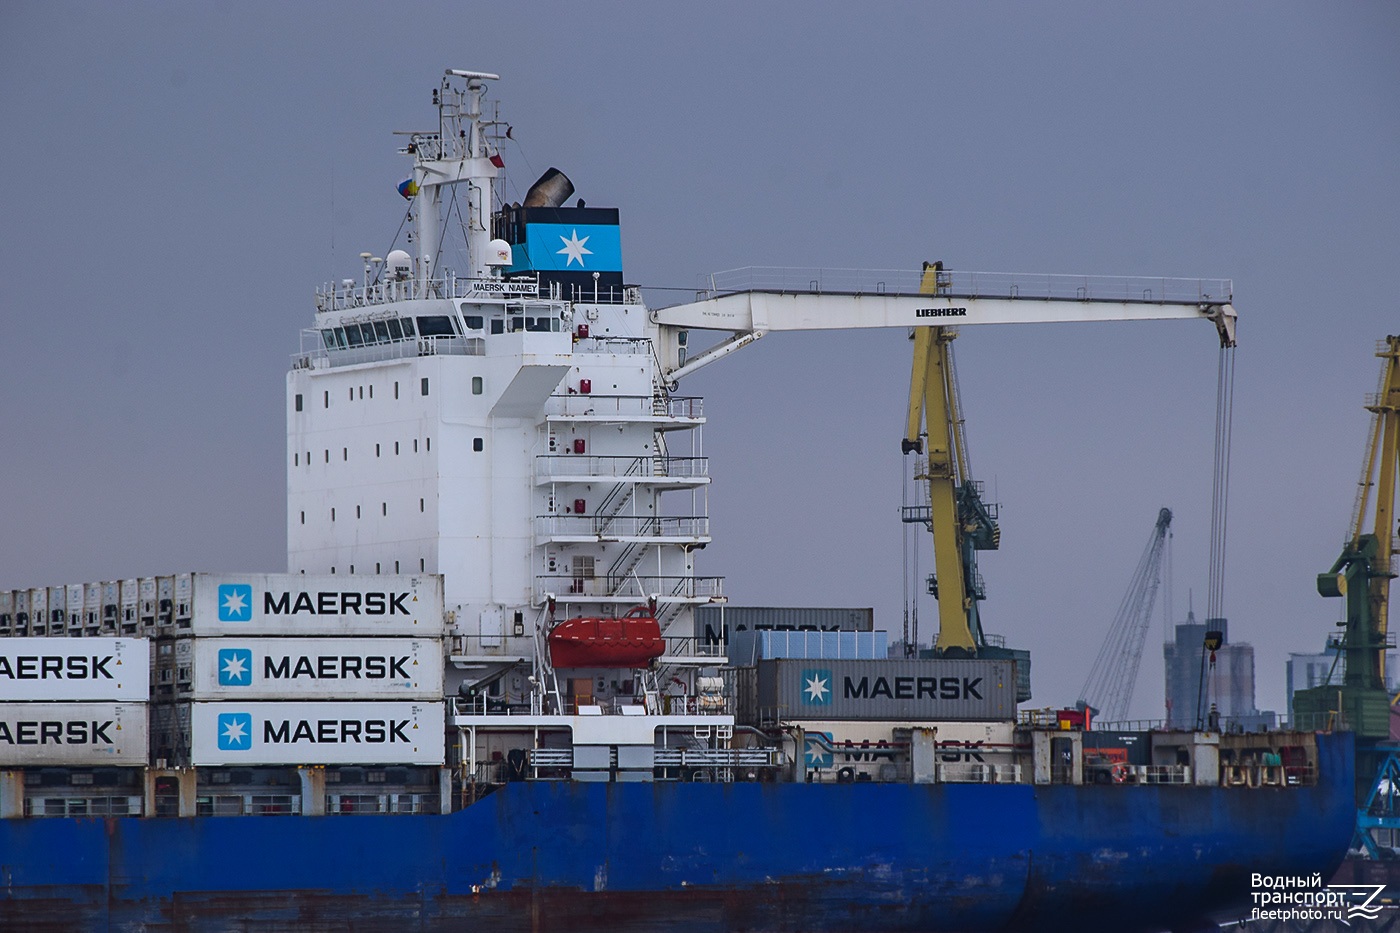 Maersk Niamey. Надстройки